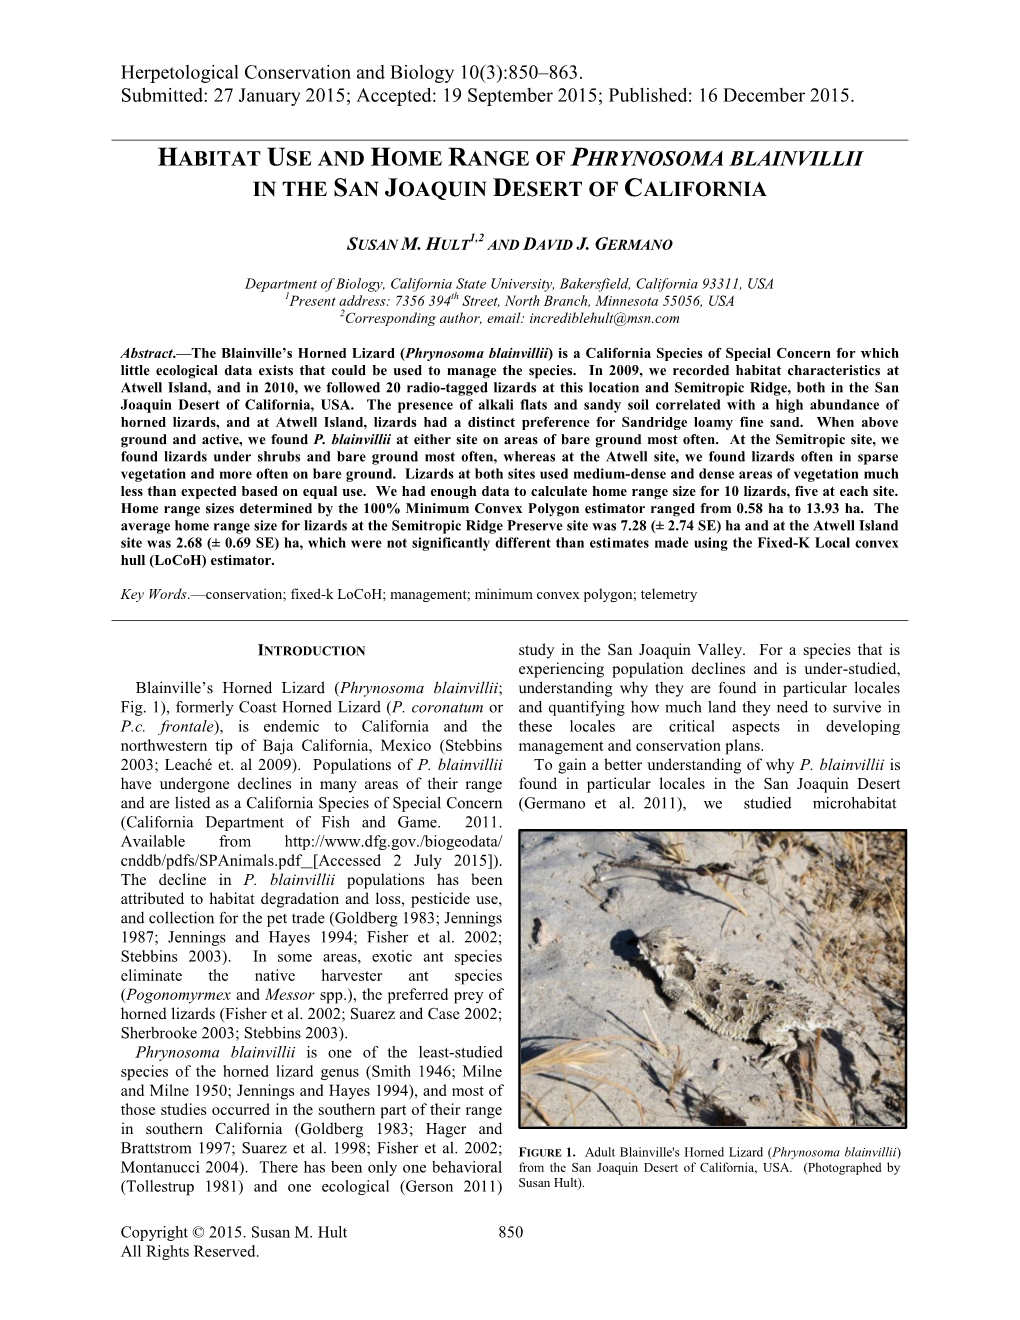 Habitat Use and Home Range of Phrynosoma Blainvillii in the San Joaquin Desert of California